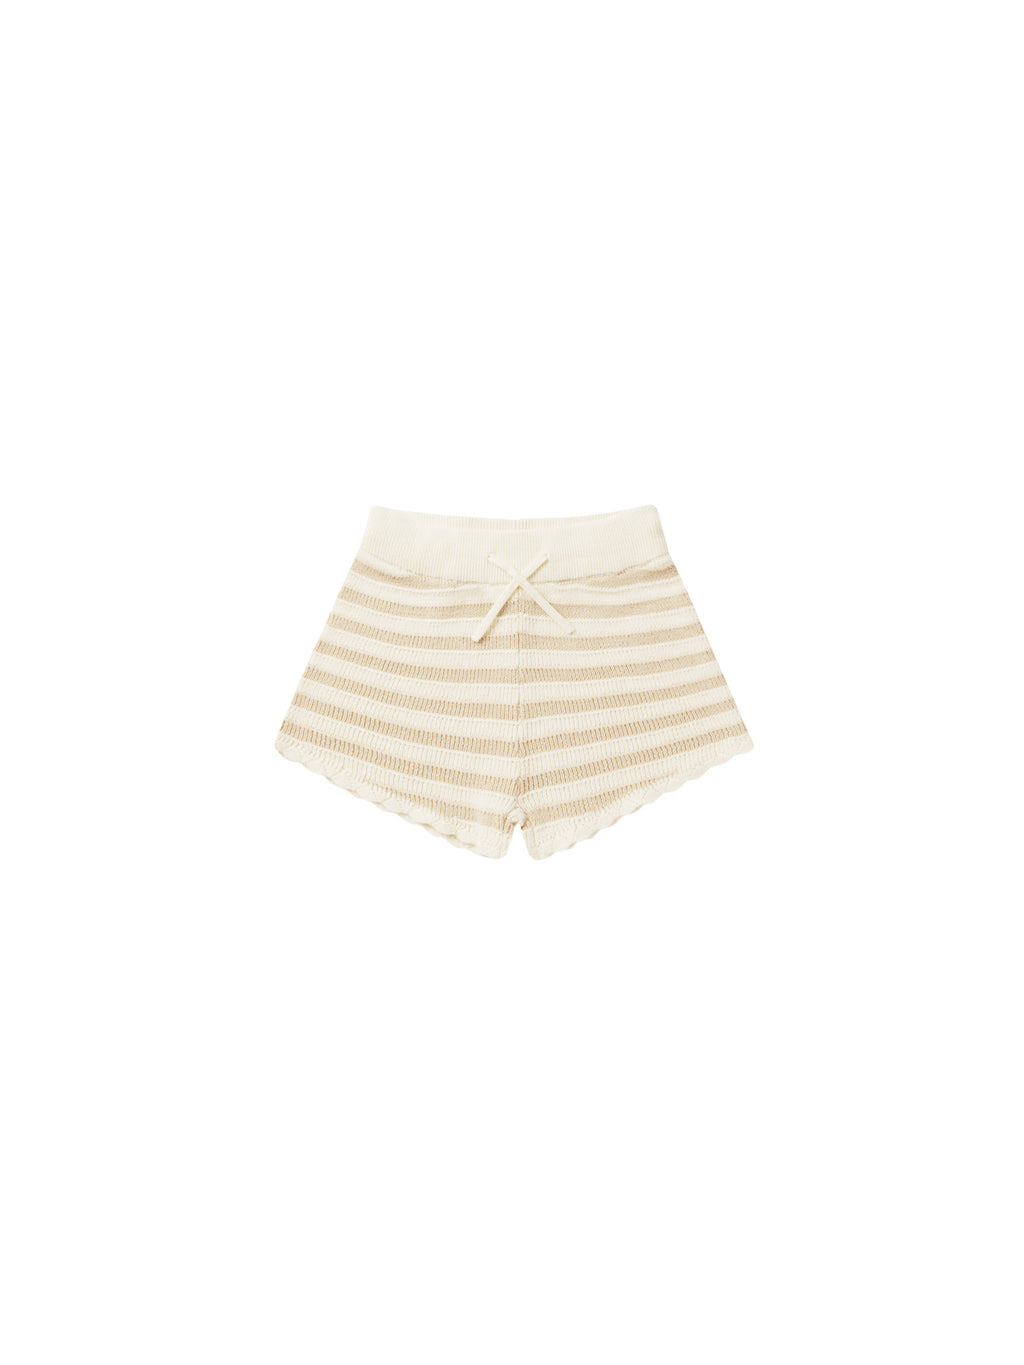 Rylee + Cru Knit Shorts - Sand Stripe